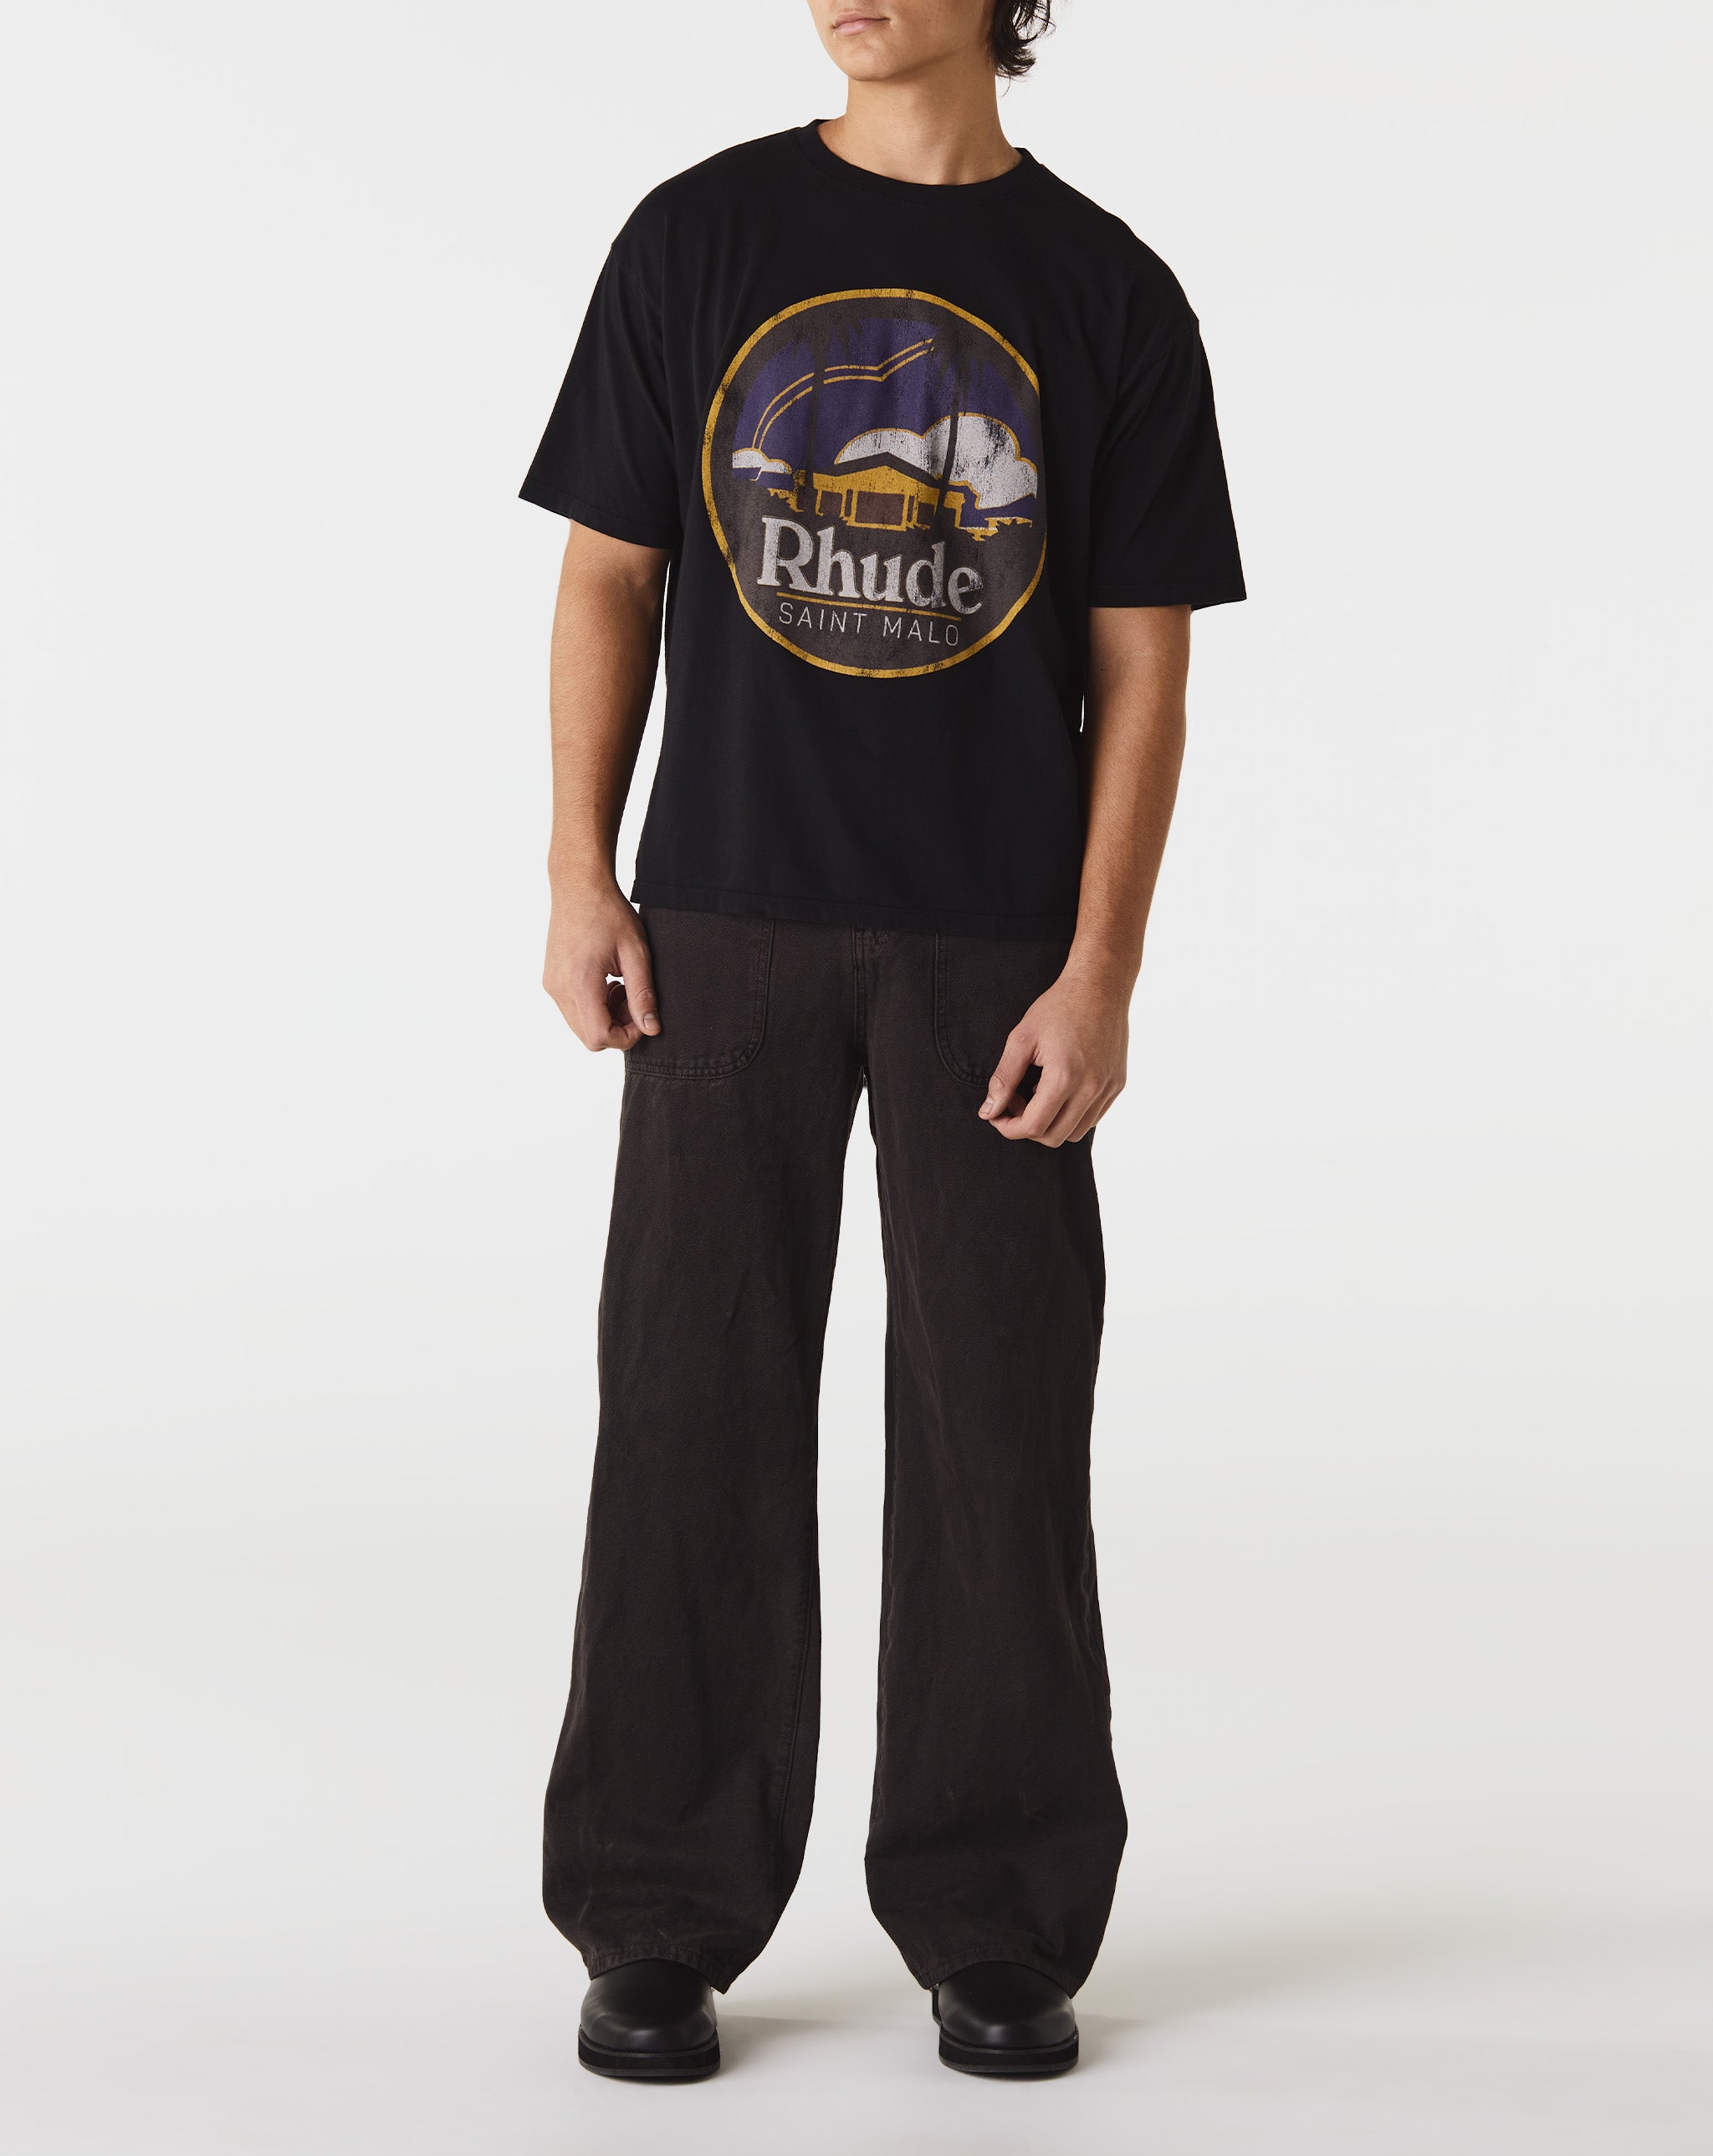 Rhude Saint Malo T-Shirt - Rule of Next Apparel